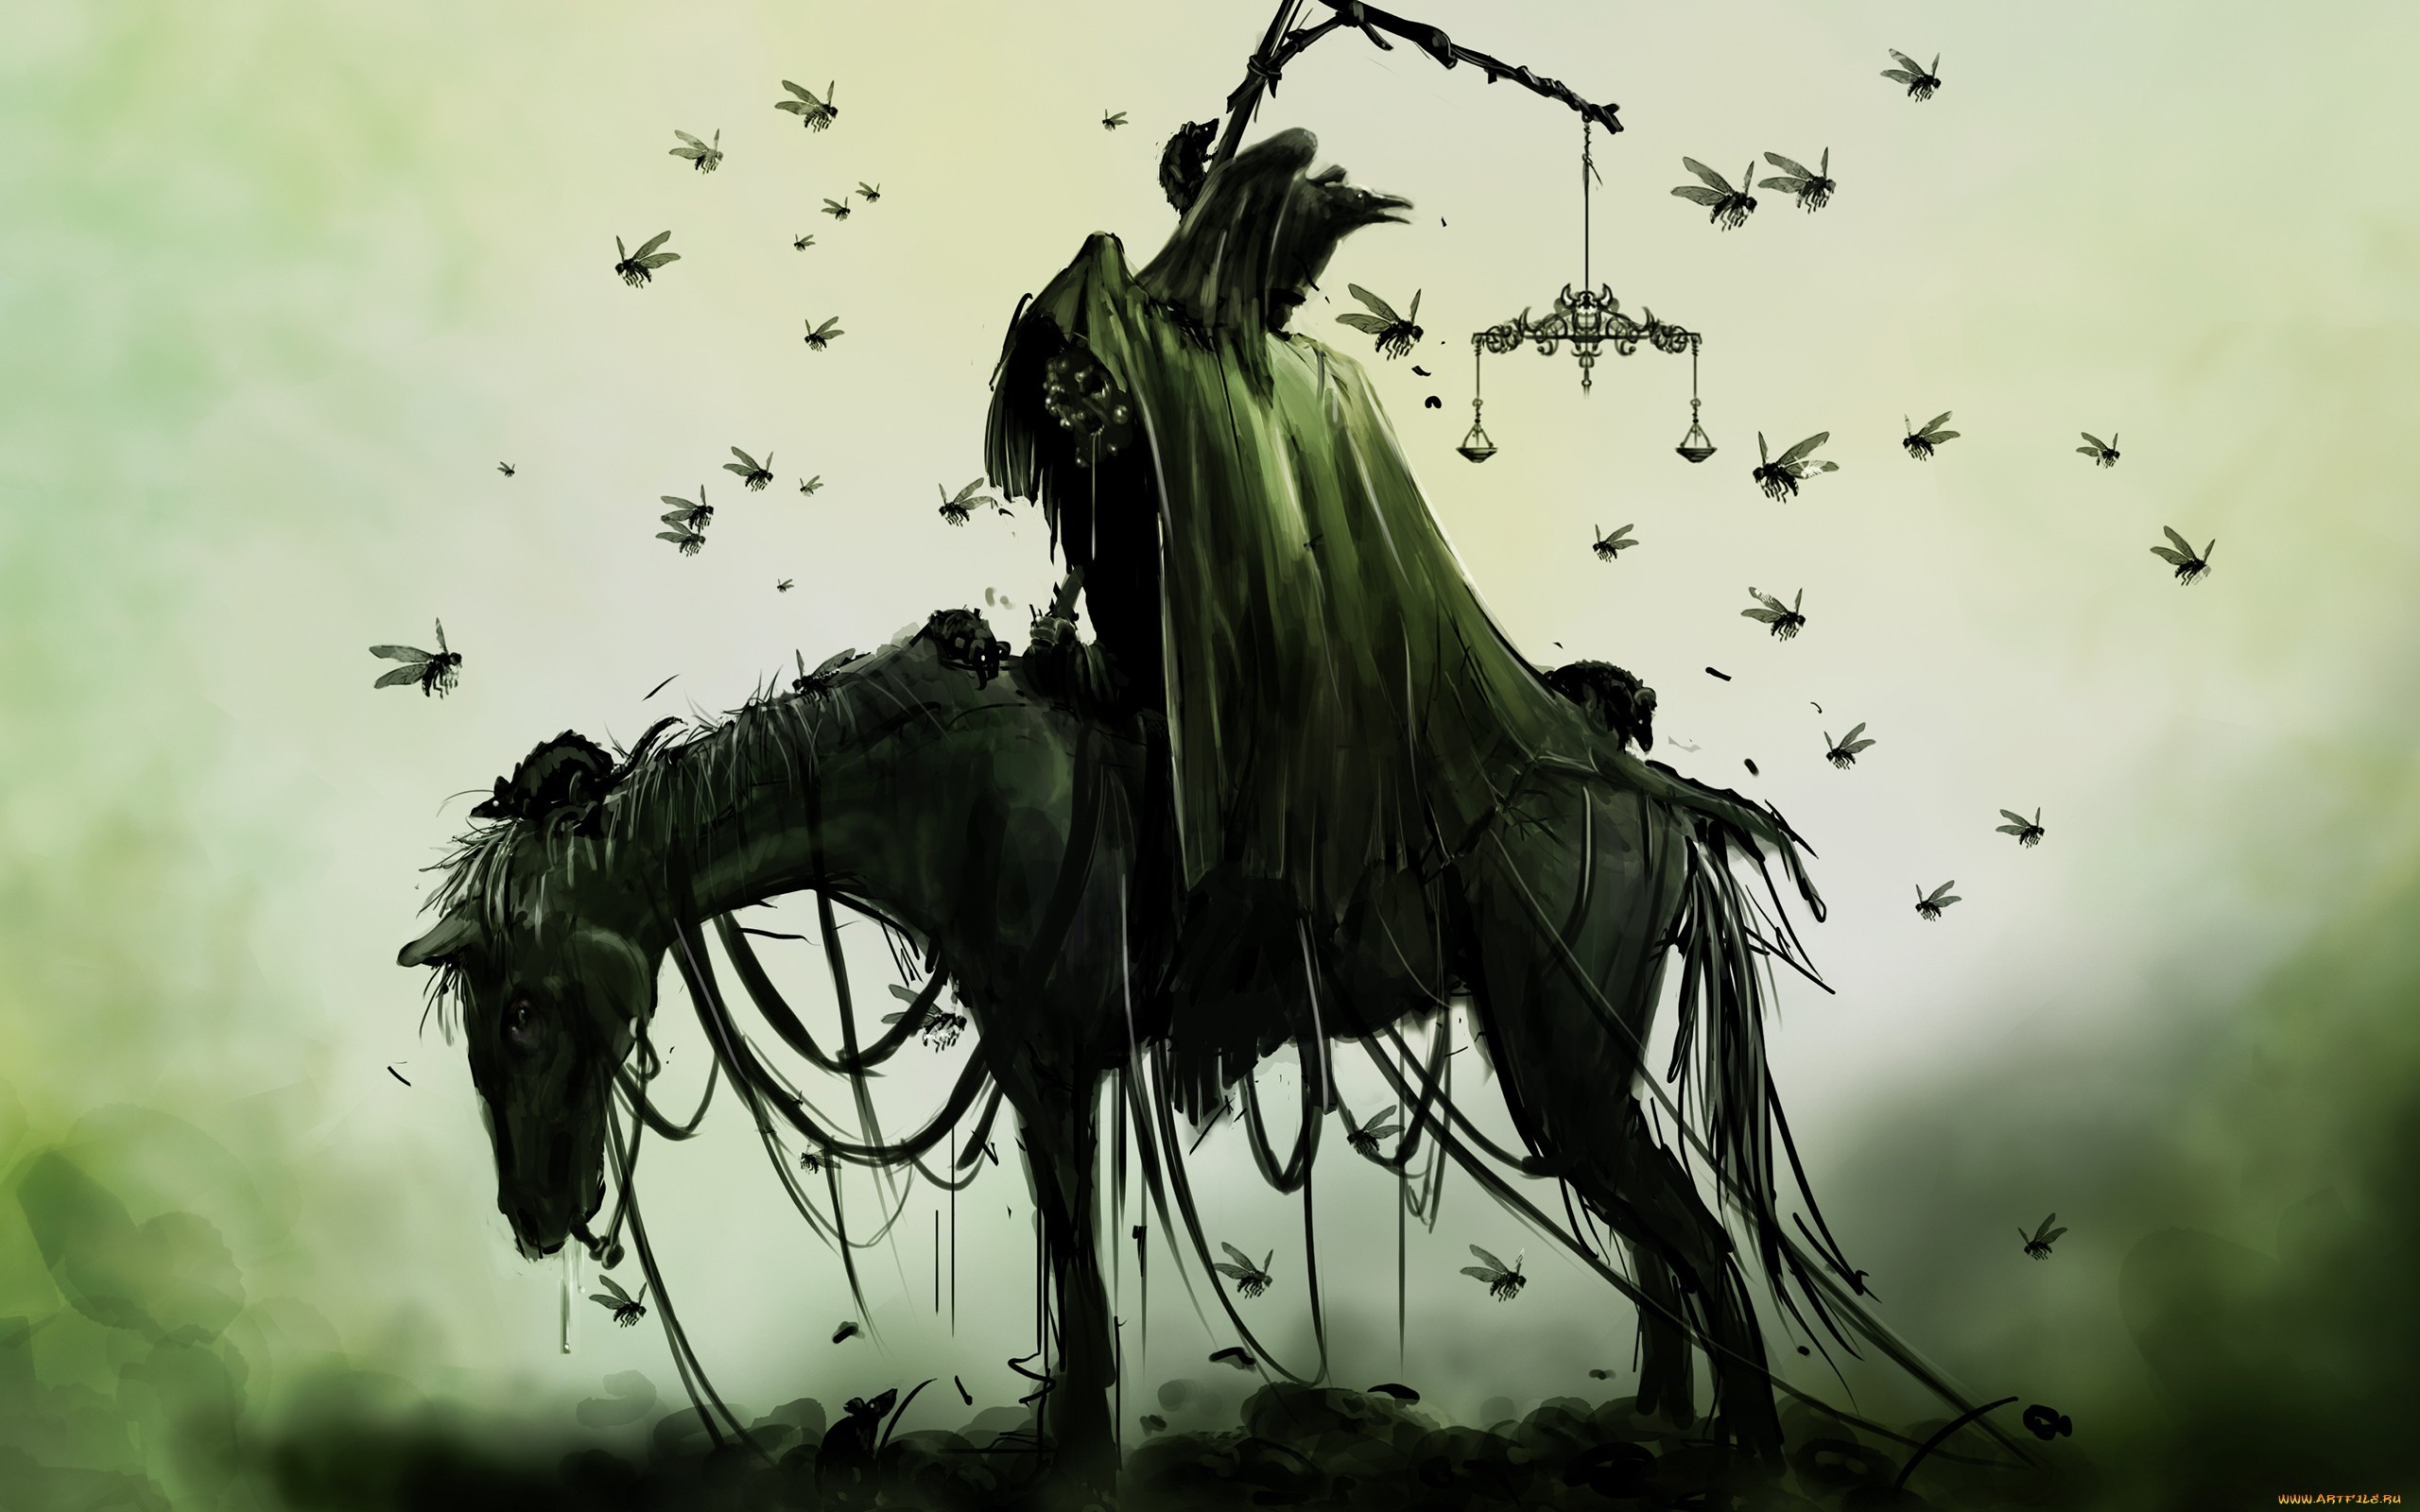 grim reaper on horse wallpaper